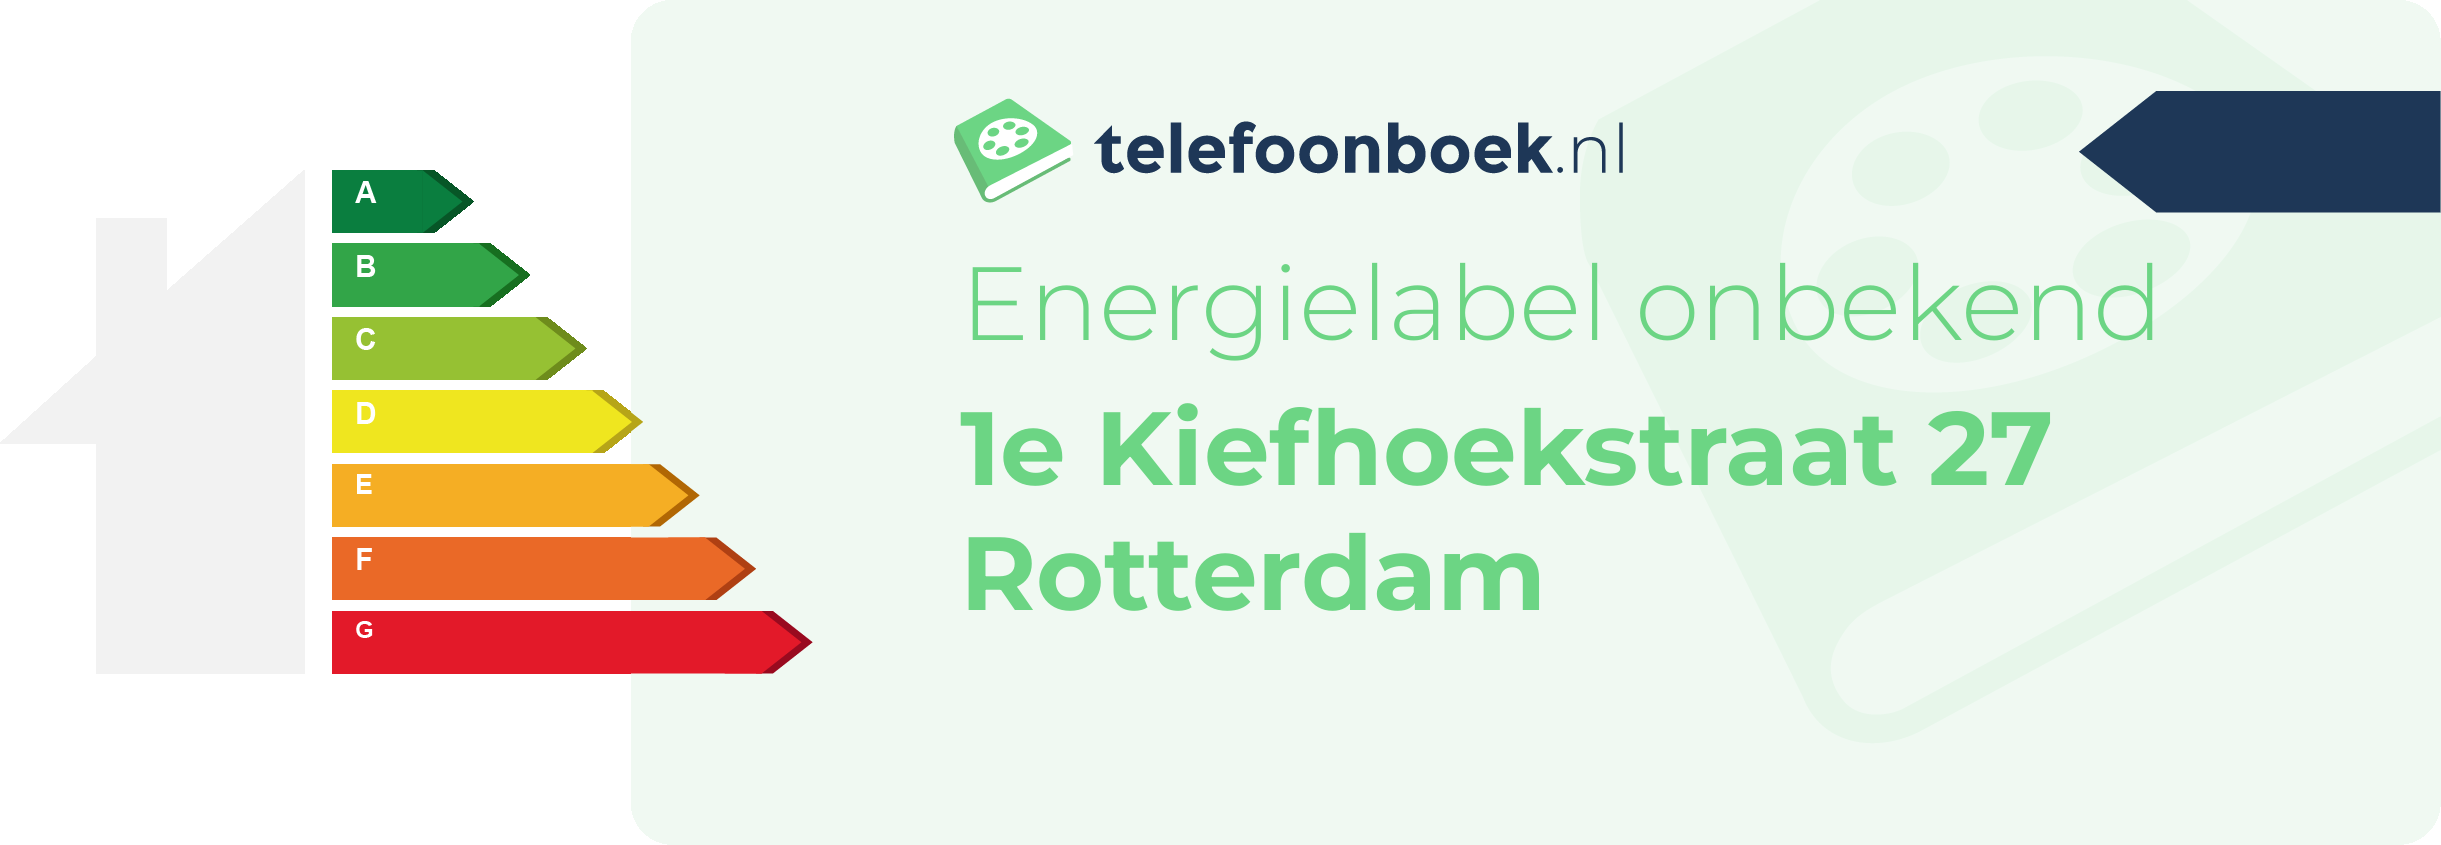 Energielabel 1e Kiefhoekstraat 27 Rotterdam